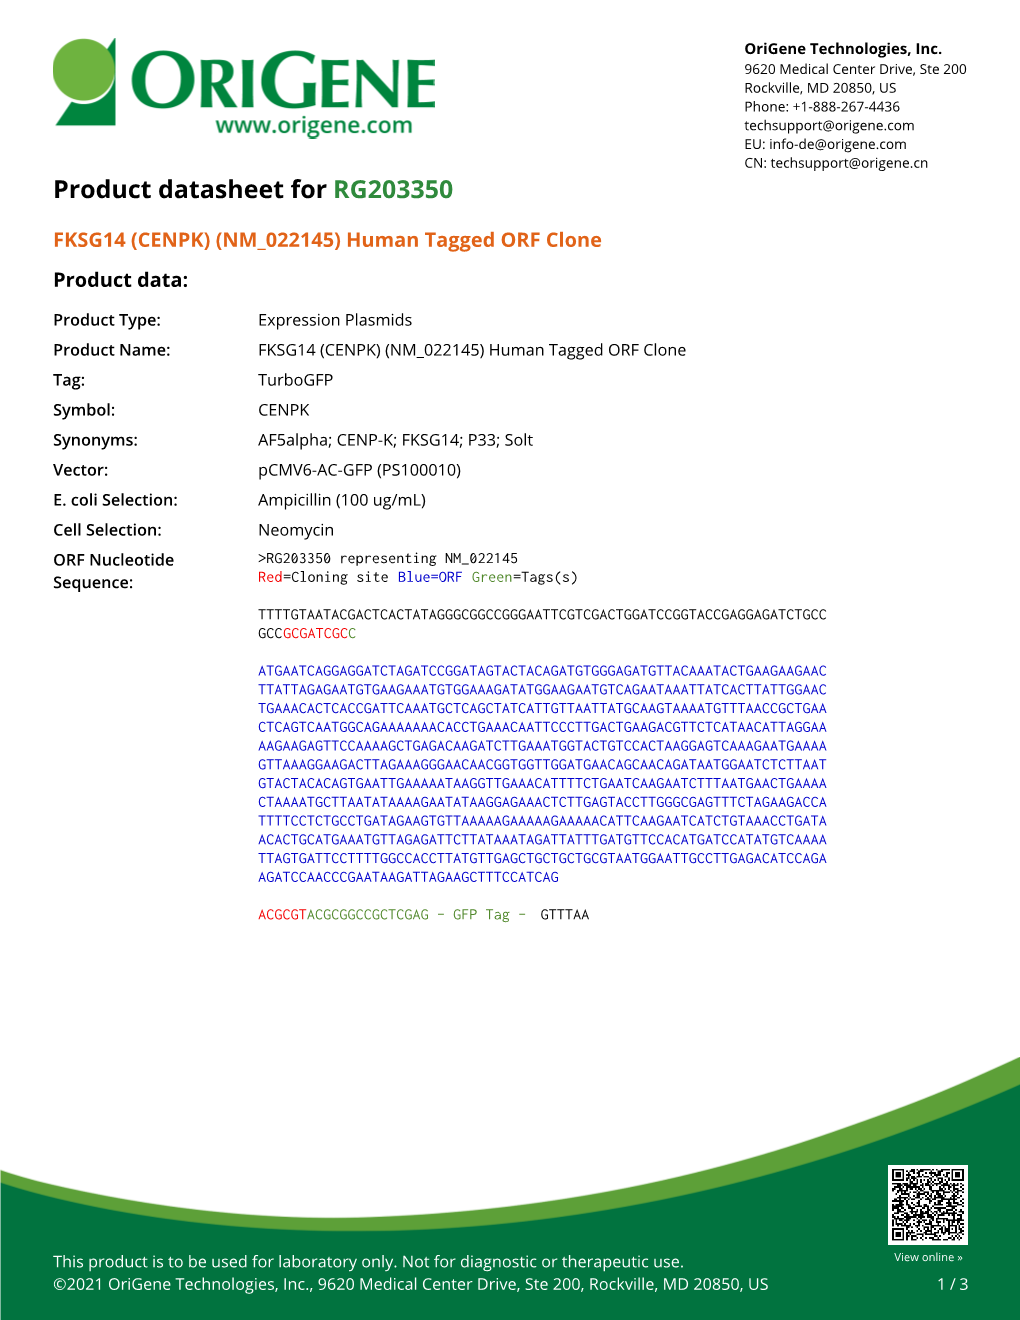 FKSG14 (CENPK) (NM 022145) Human Tagged ORF Clone Product Data